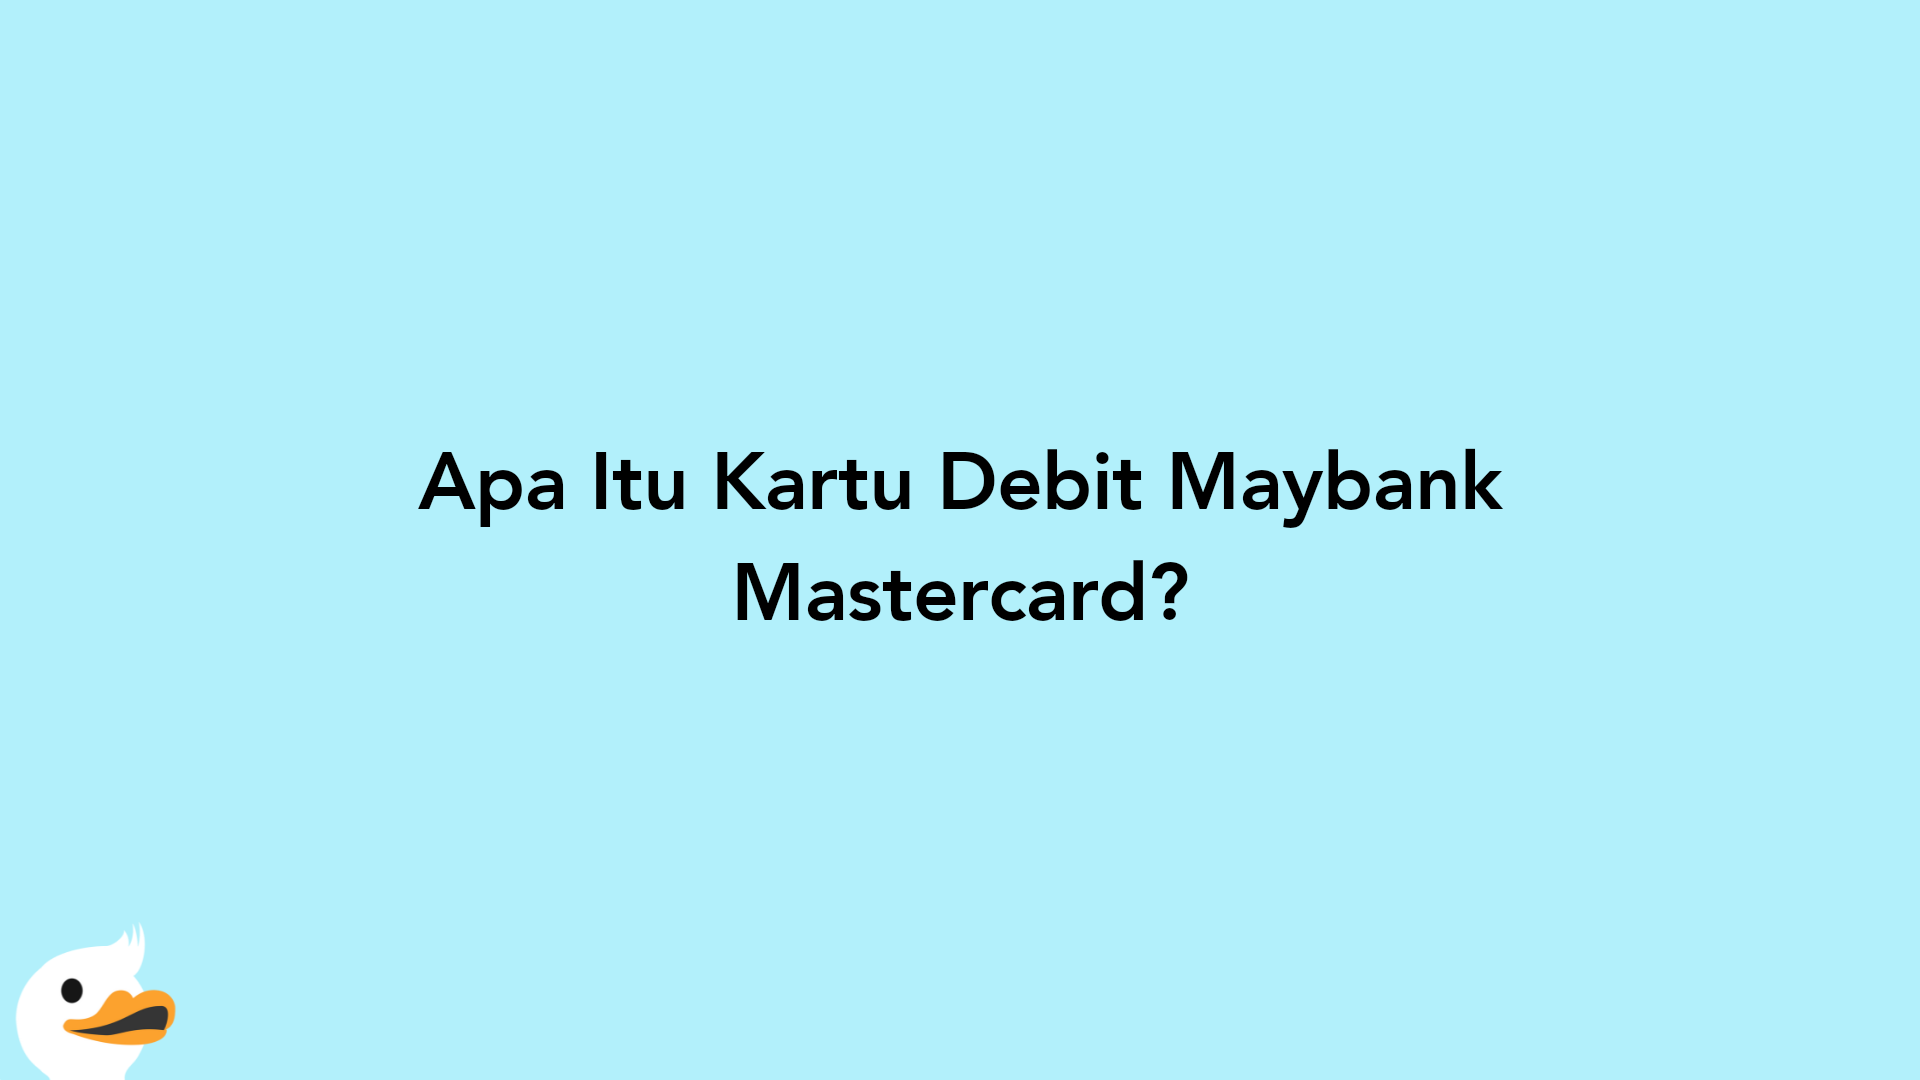 Apa Itu Kartu Debit Maybank Mastercard?